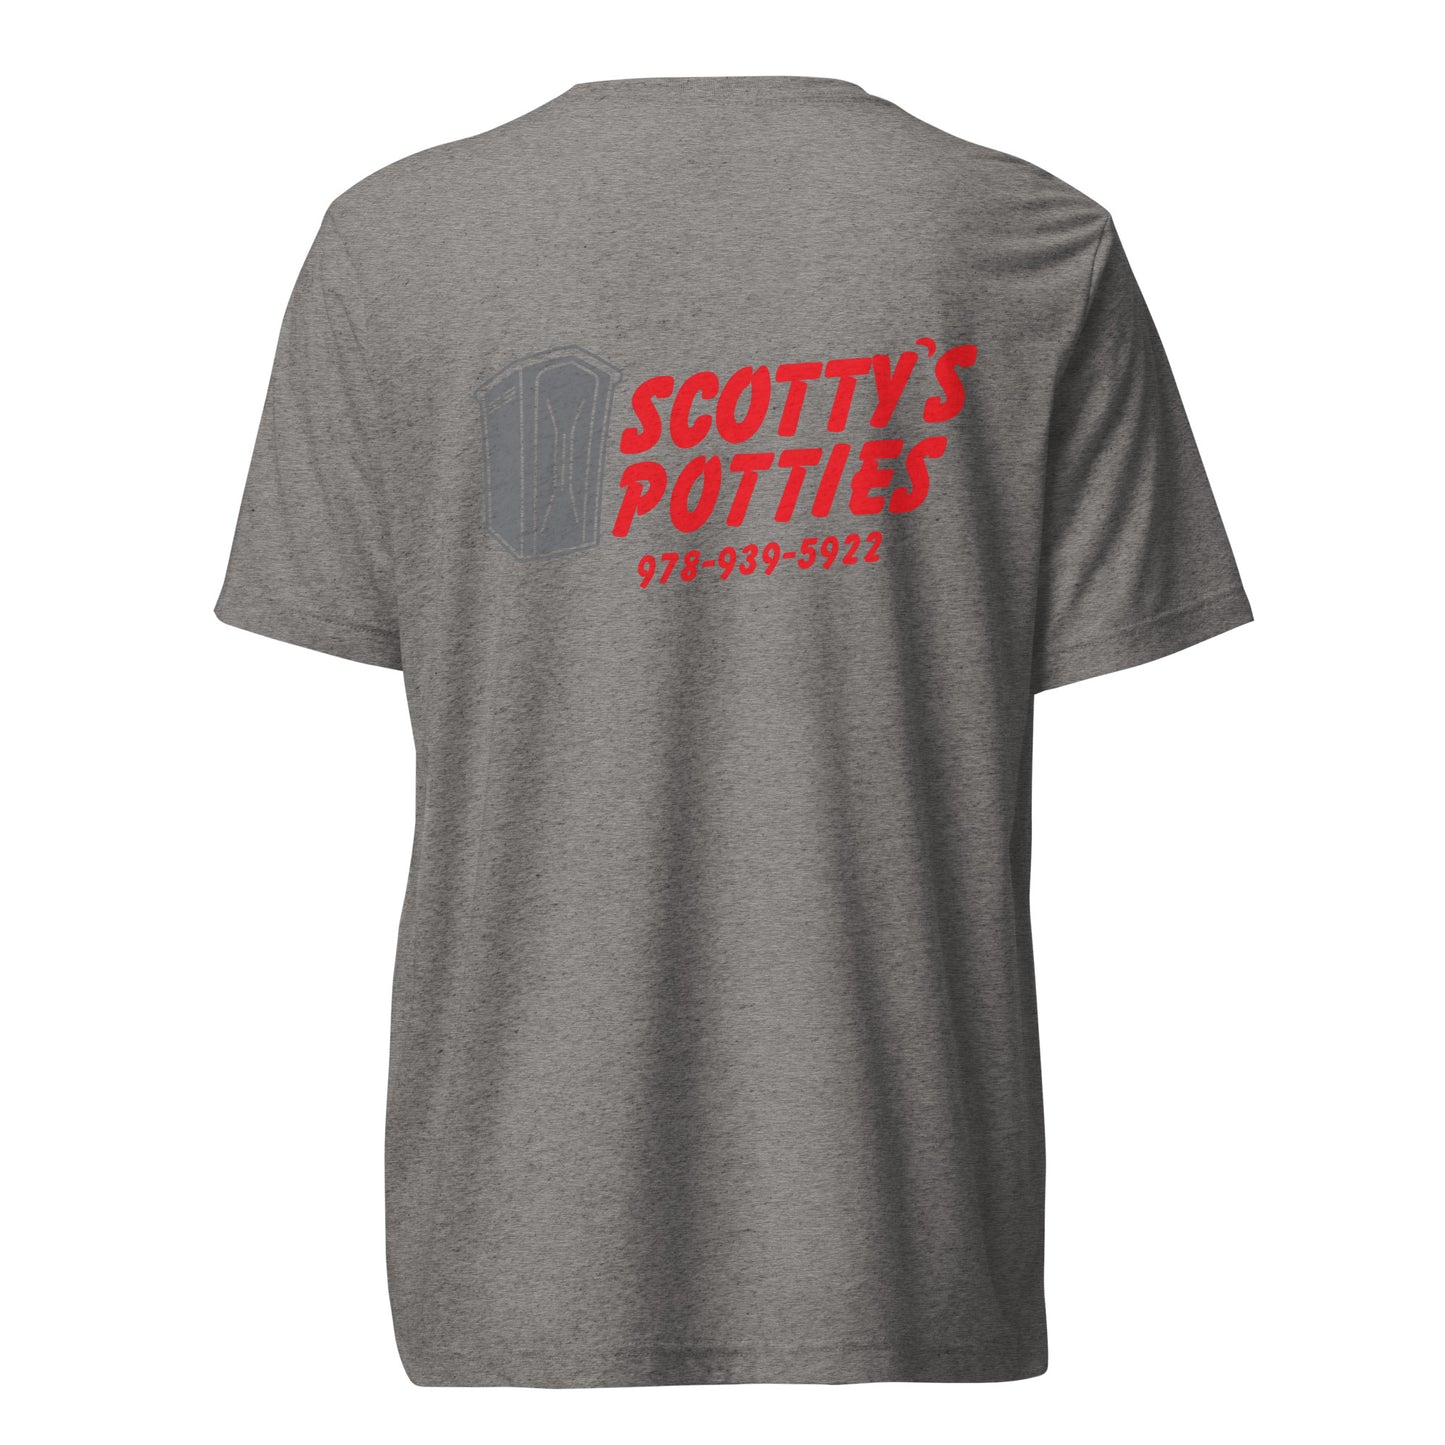 Scotty’s Potties T-shirt